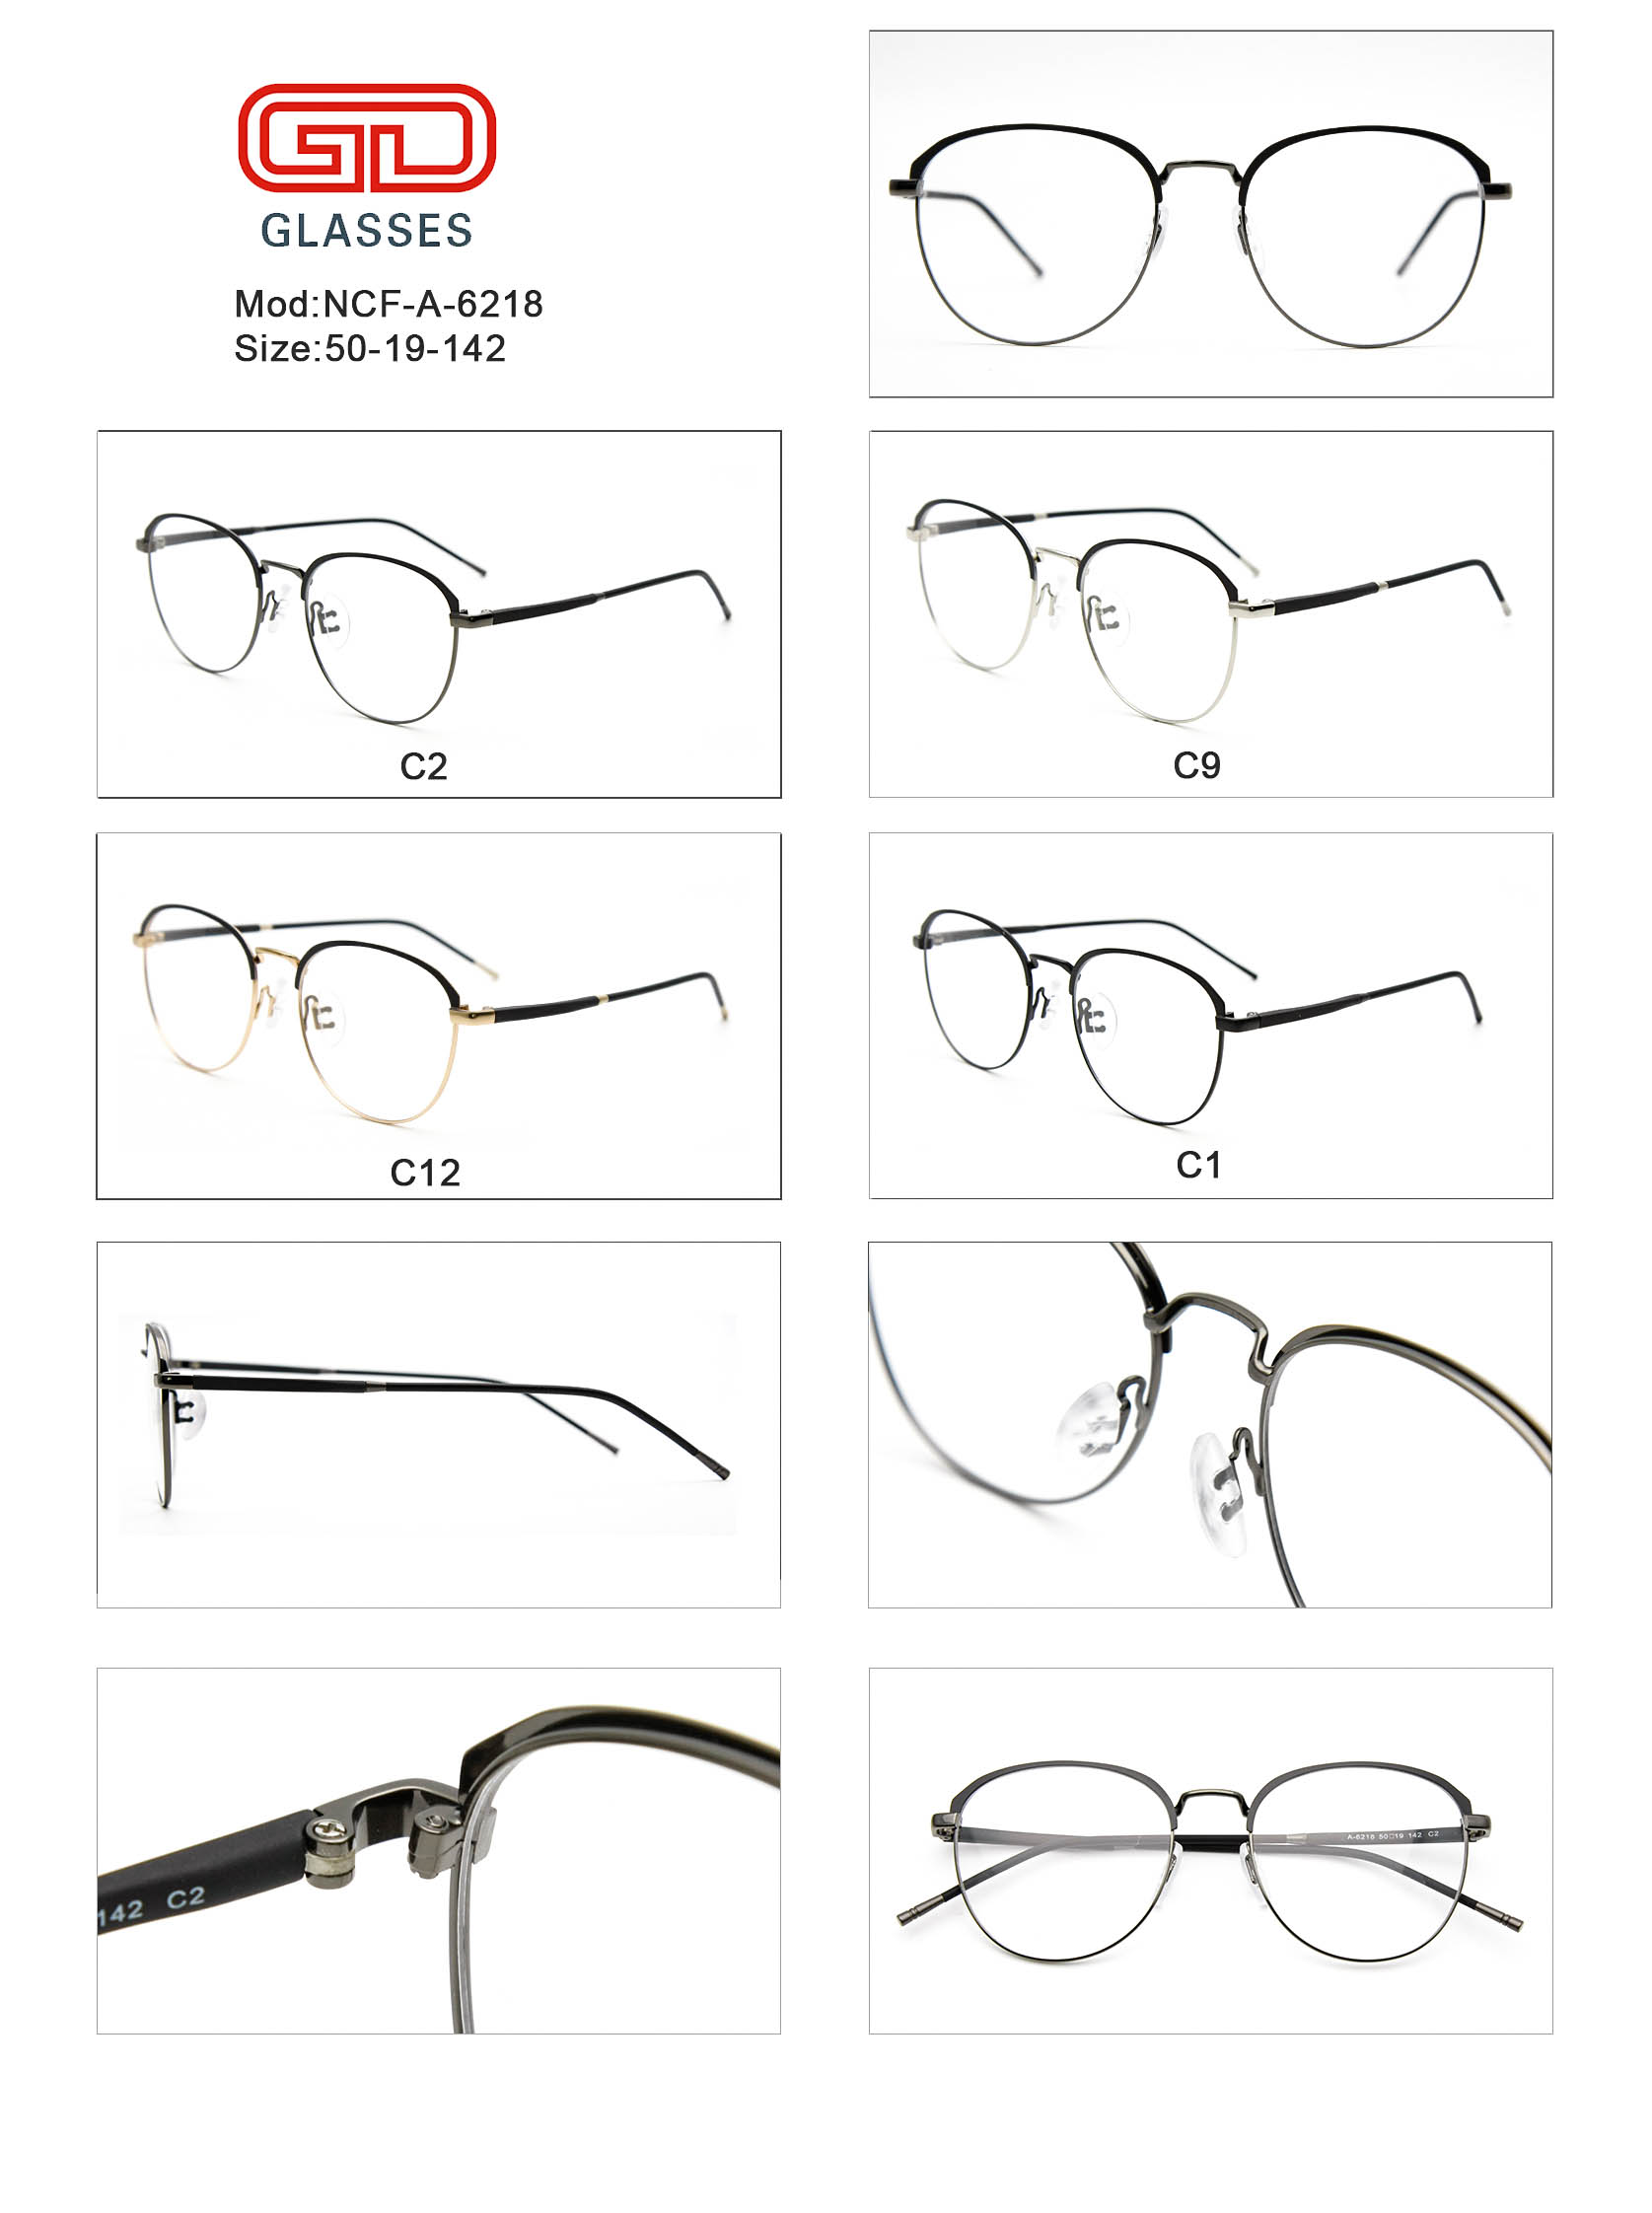 Anti Blue Light Blocking Computer Glasses Glasses Frame Metal Eyeglasses Frame